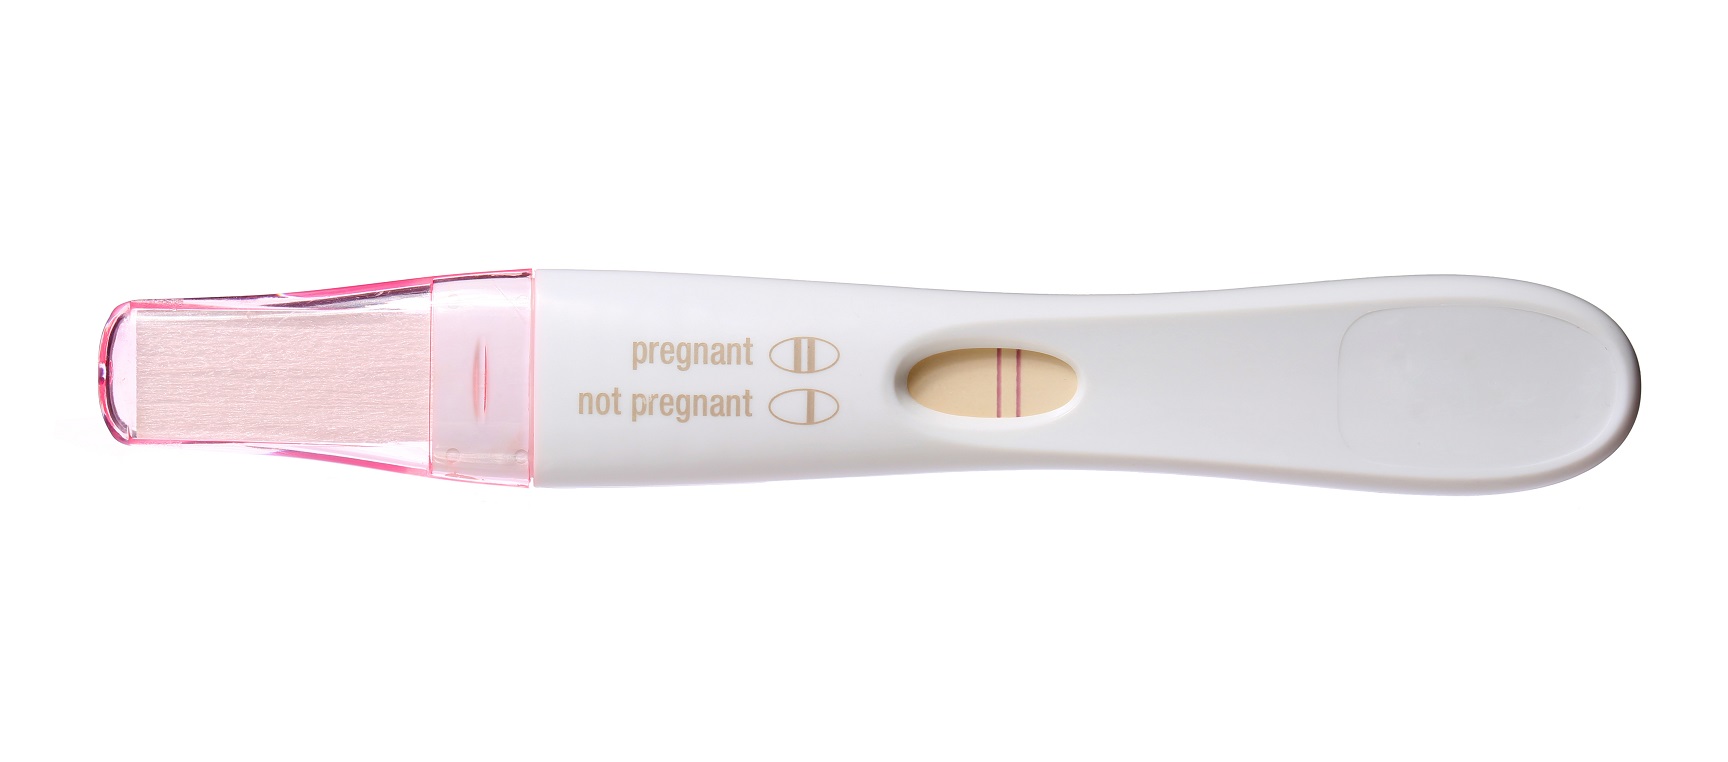 Test de embarazo positivo real